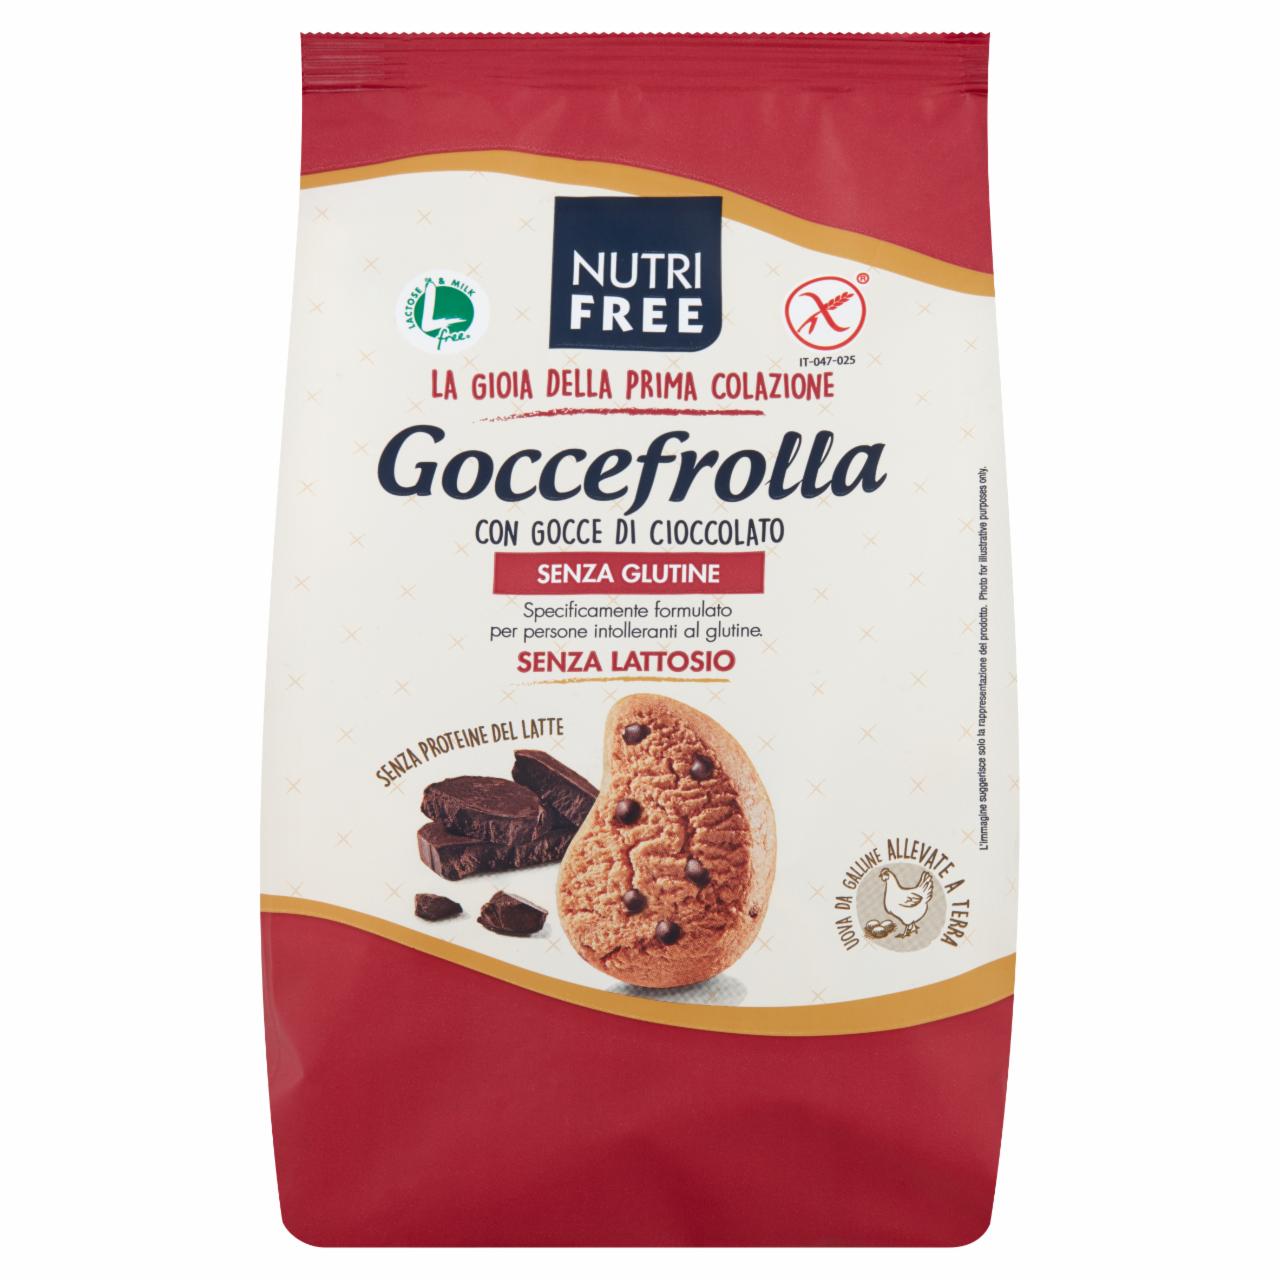 Képek - NutriFree Goccefrolla con Gocce di Cioccolato gluténmentes sütőipari termék 400 g